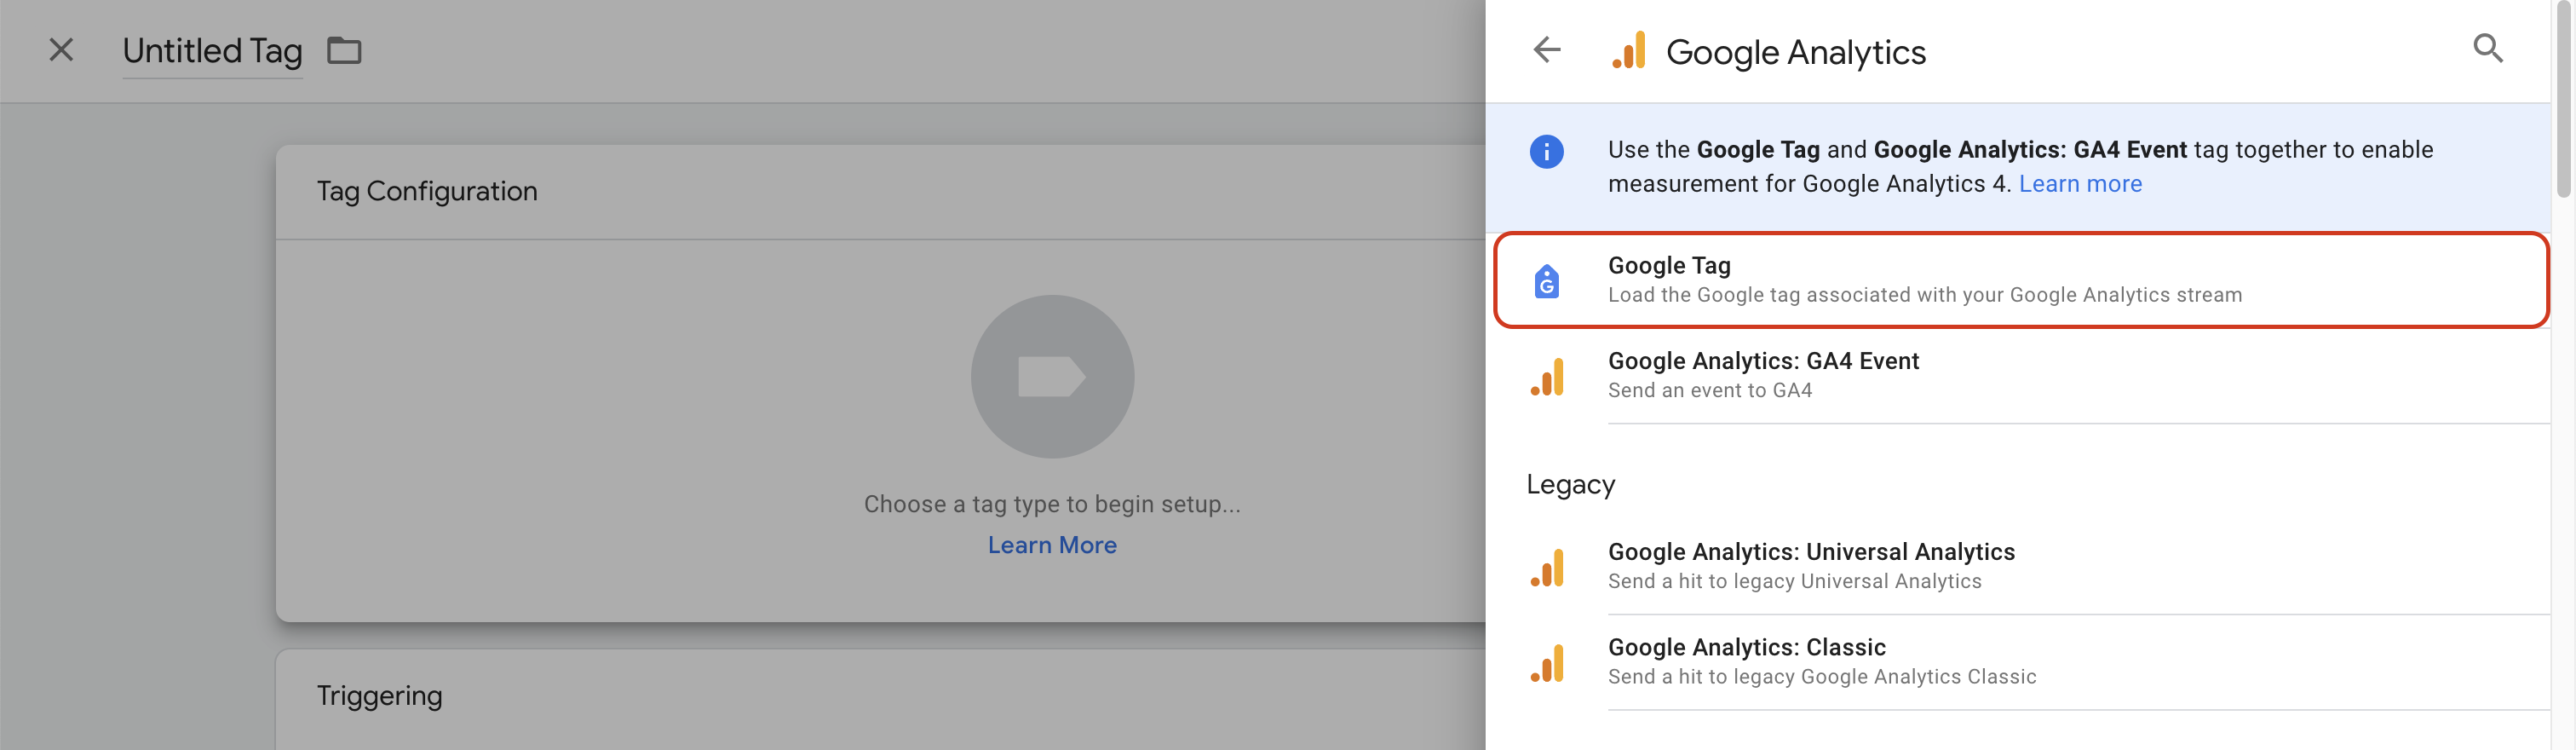 Google Analytics select google tag for GA4